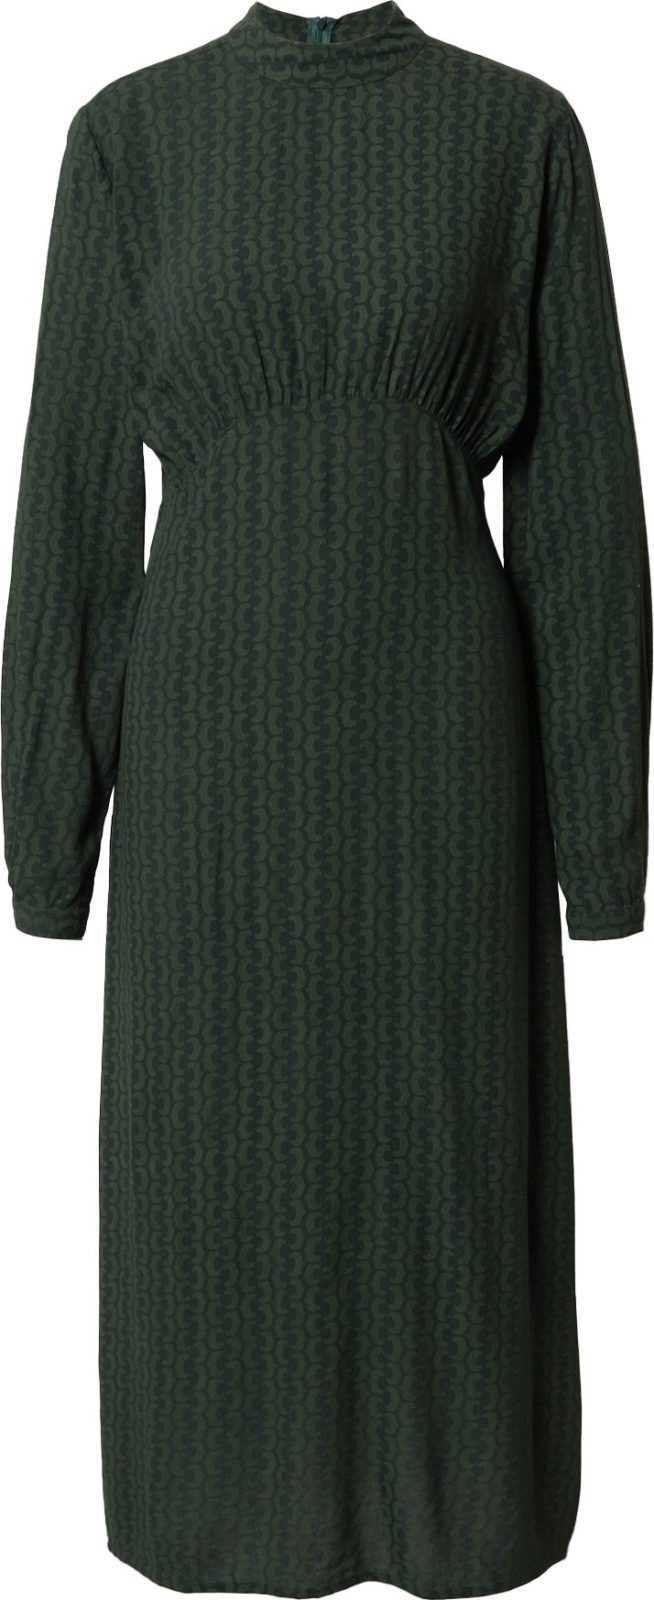 Guido Maria Kretschmer Collection Šaty 'Maureen' zelená / černá